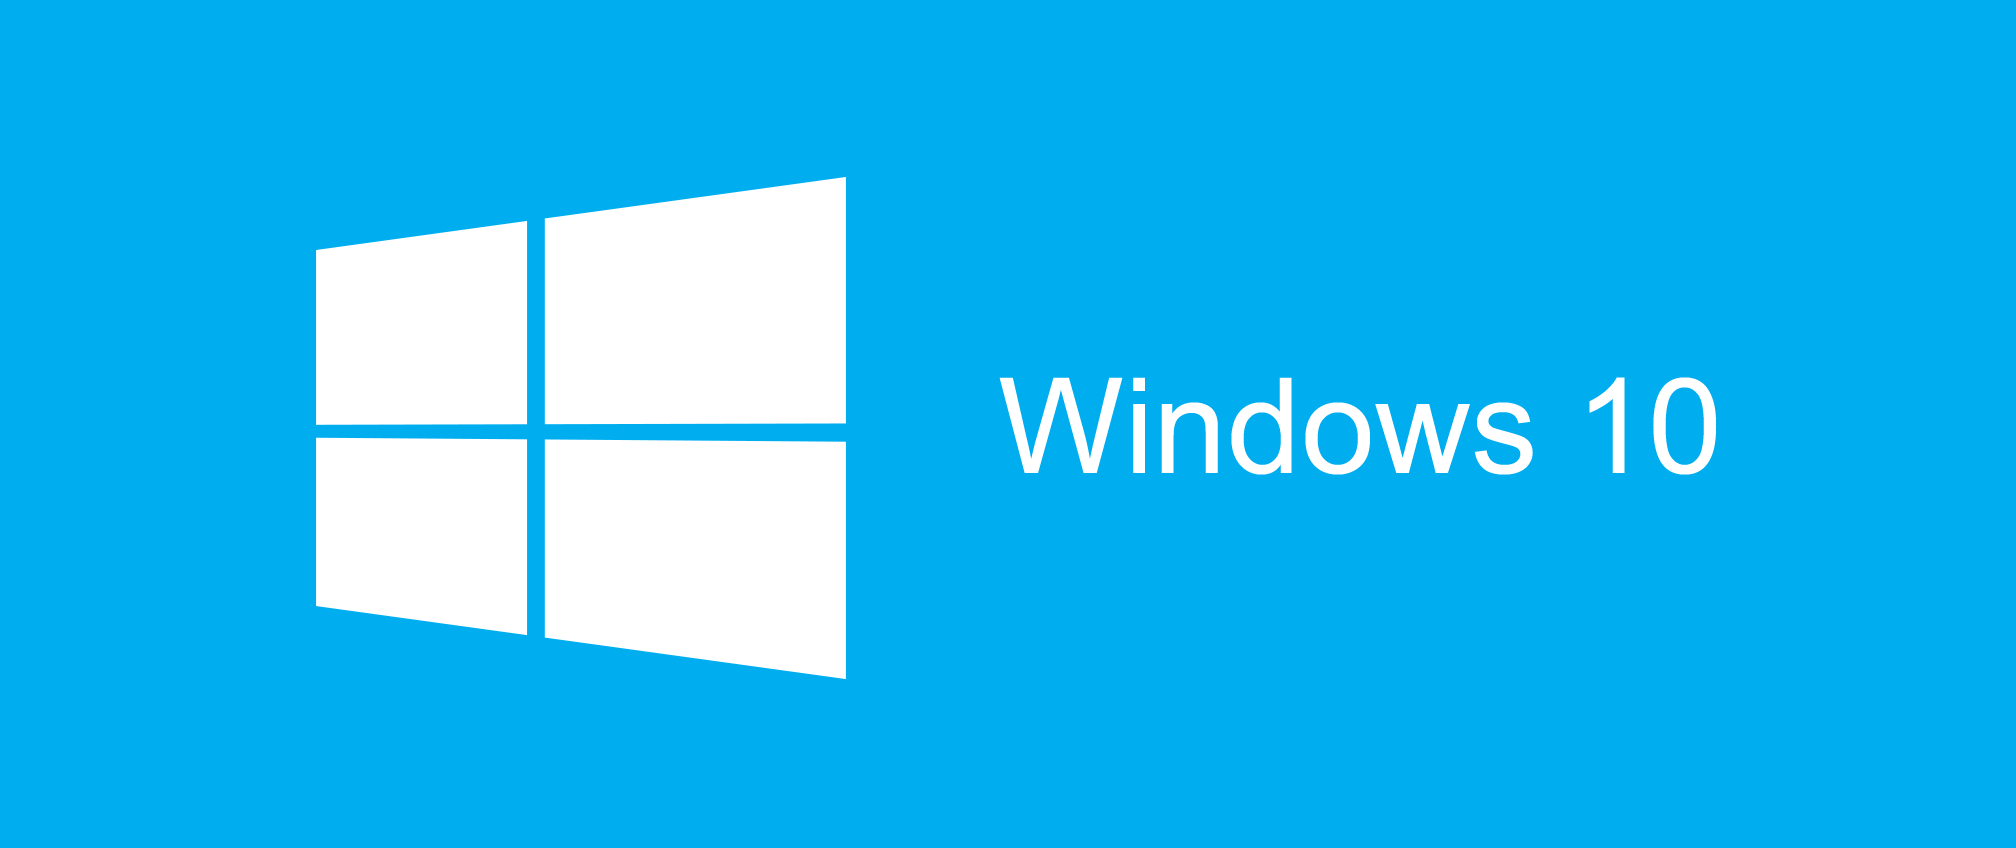 Microsoft Windows 10 Logo - Windows 10 Anniversary Update: New Features